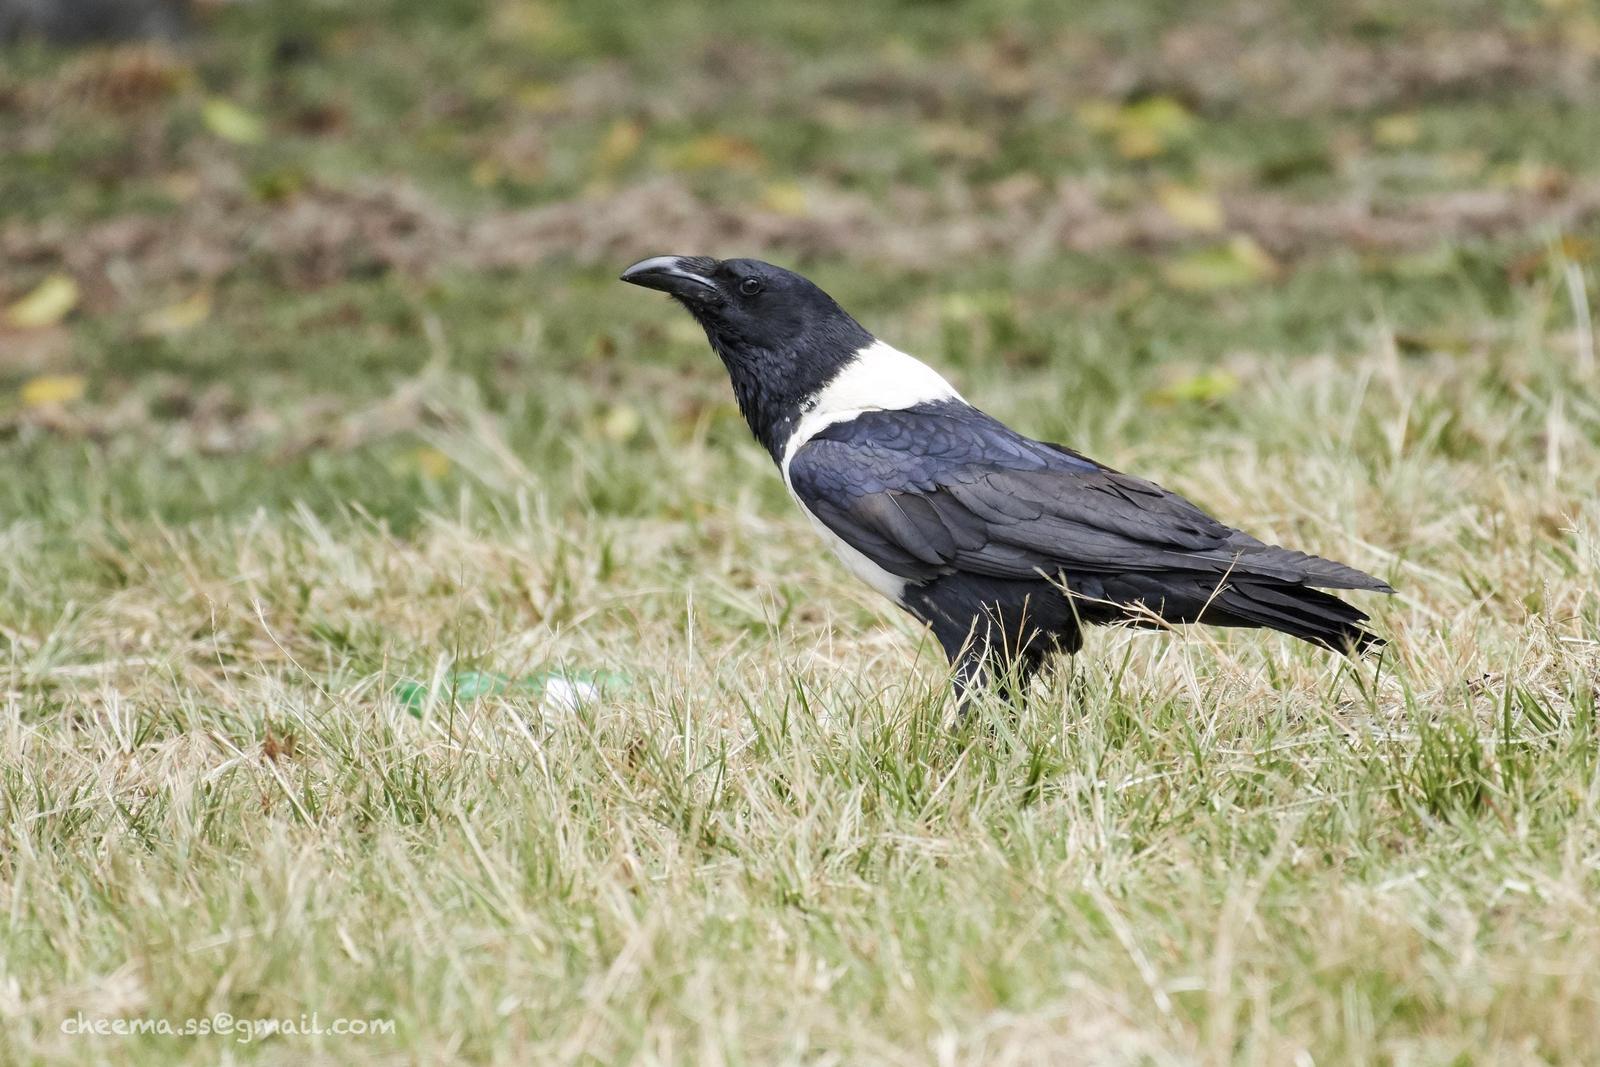 Pied Crow Photo by Simepreet Cheema